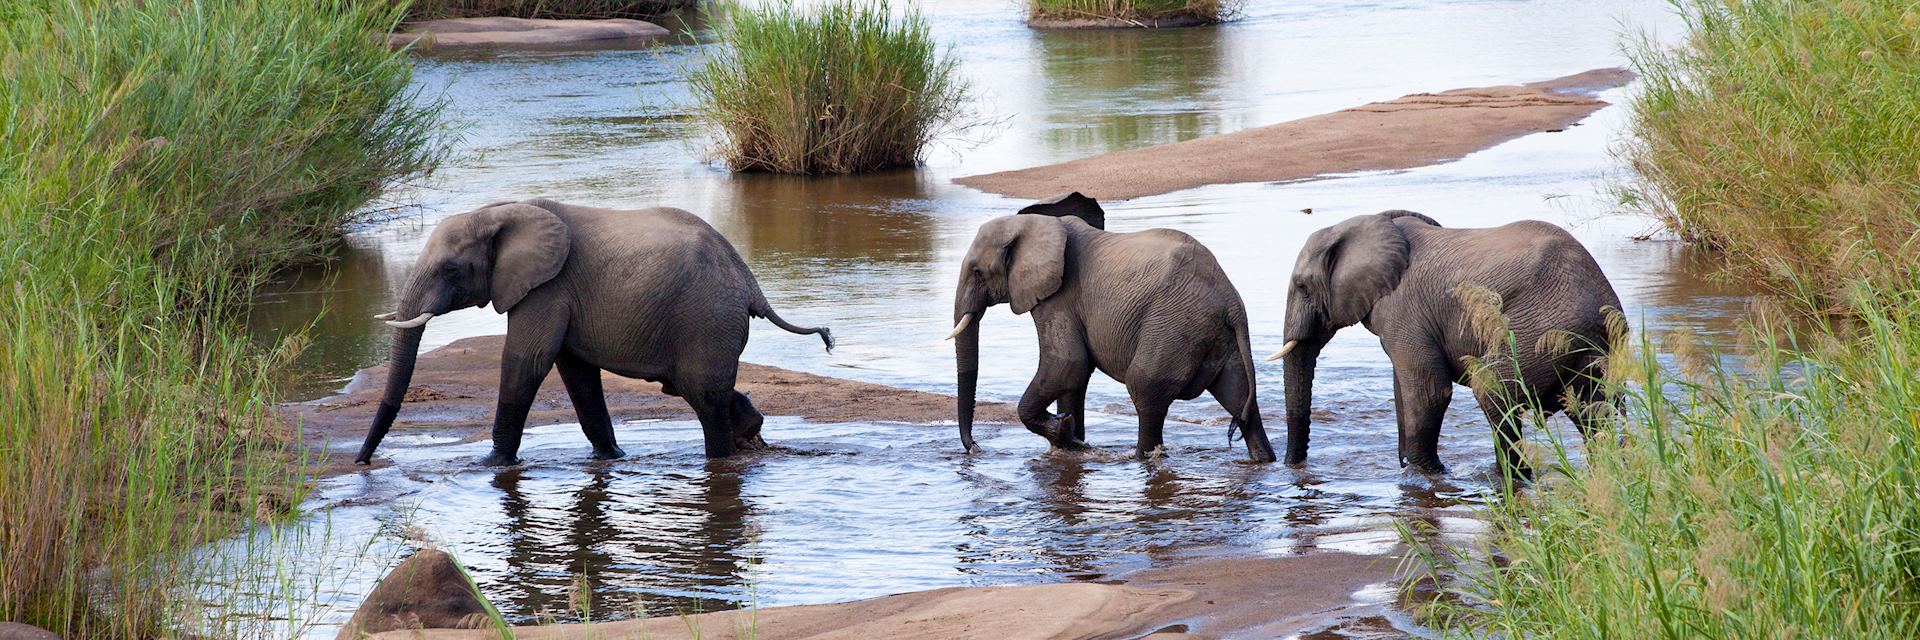 Elephants crossing a river, Kenya